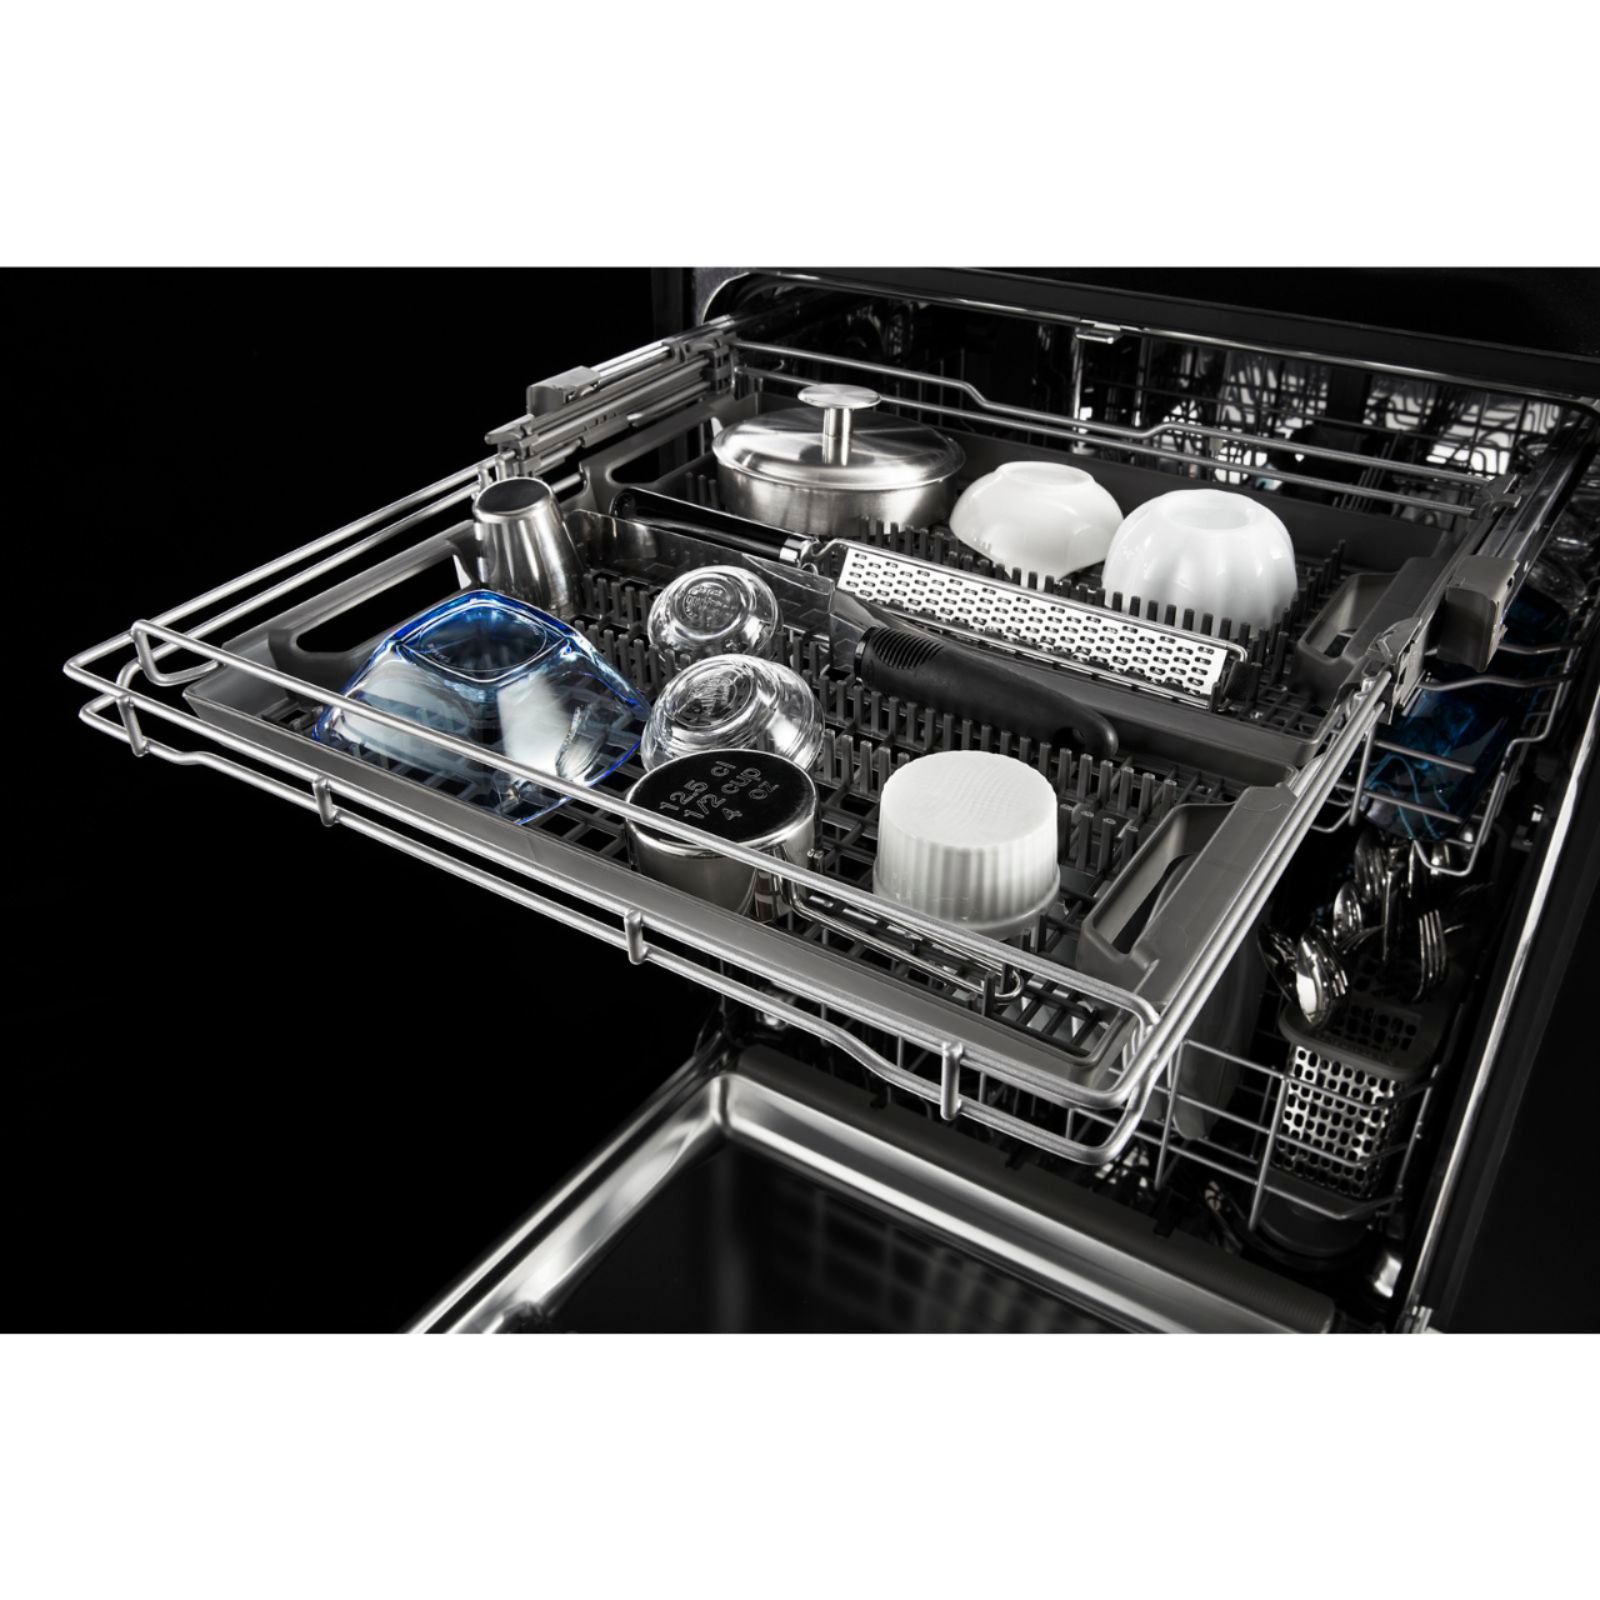 maytag dishwasher mdb7959shz reviews